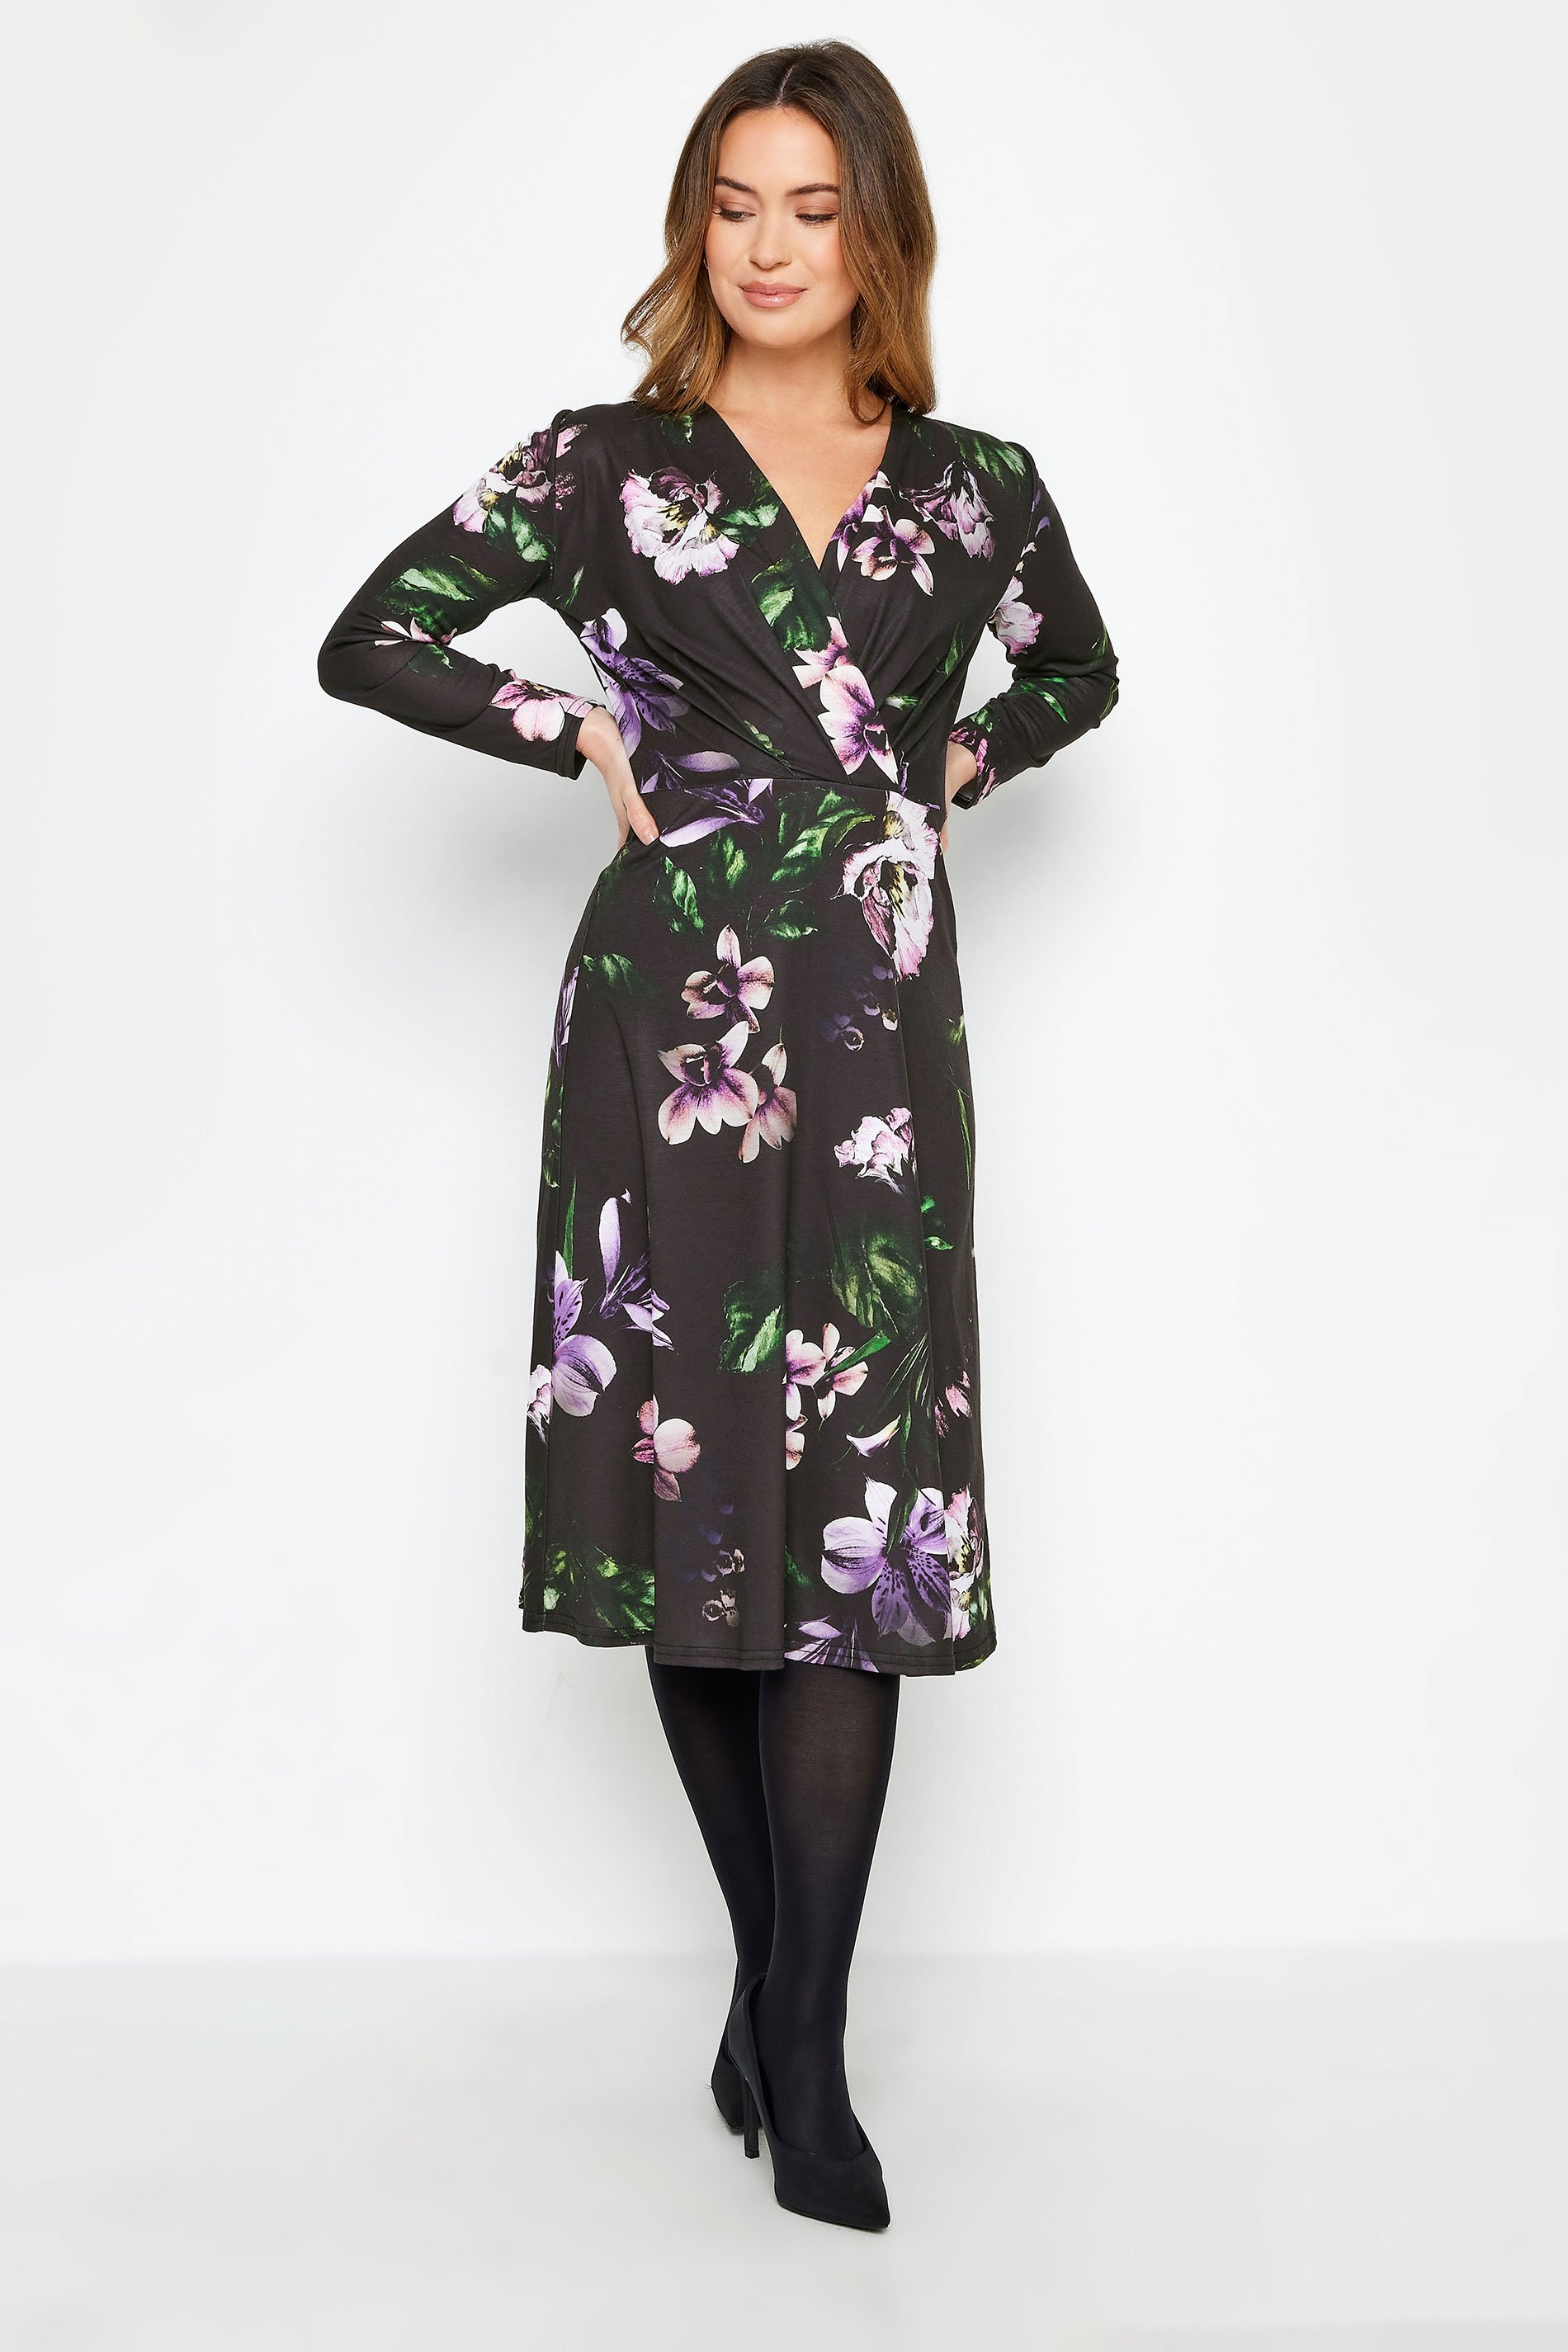 M&Co Petite Black Floral Print Wrap Dress | M&Co 1